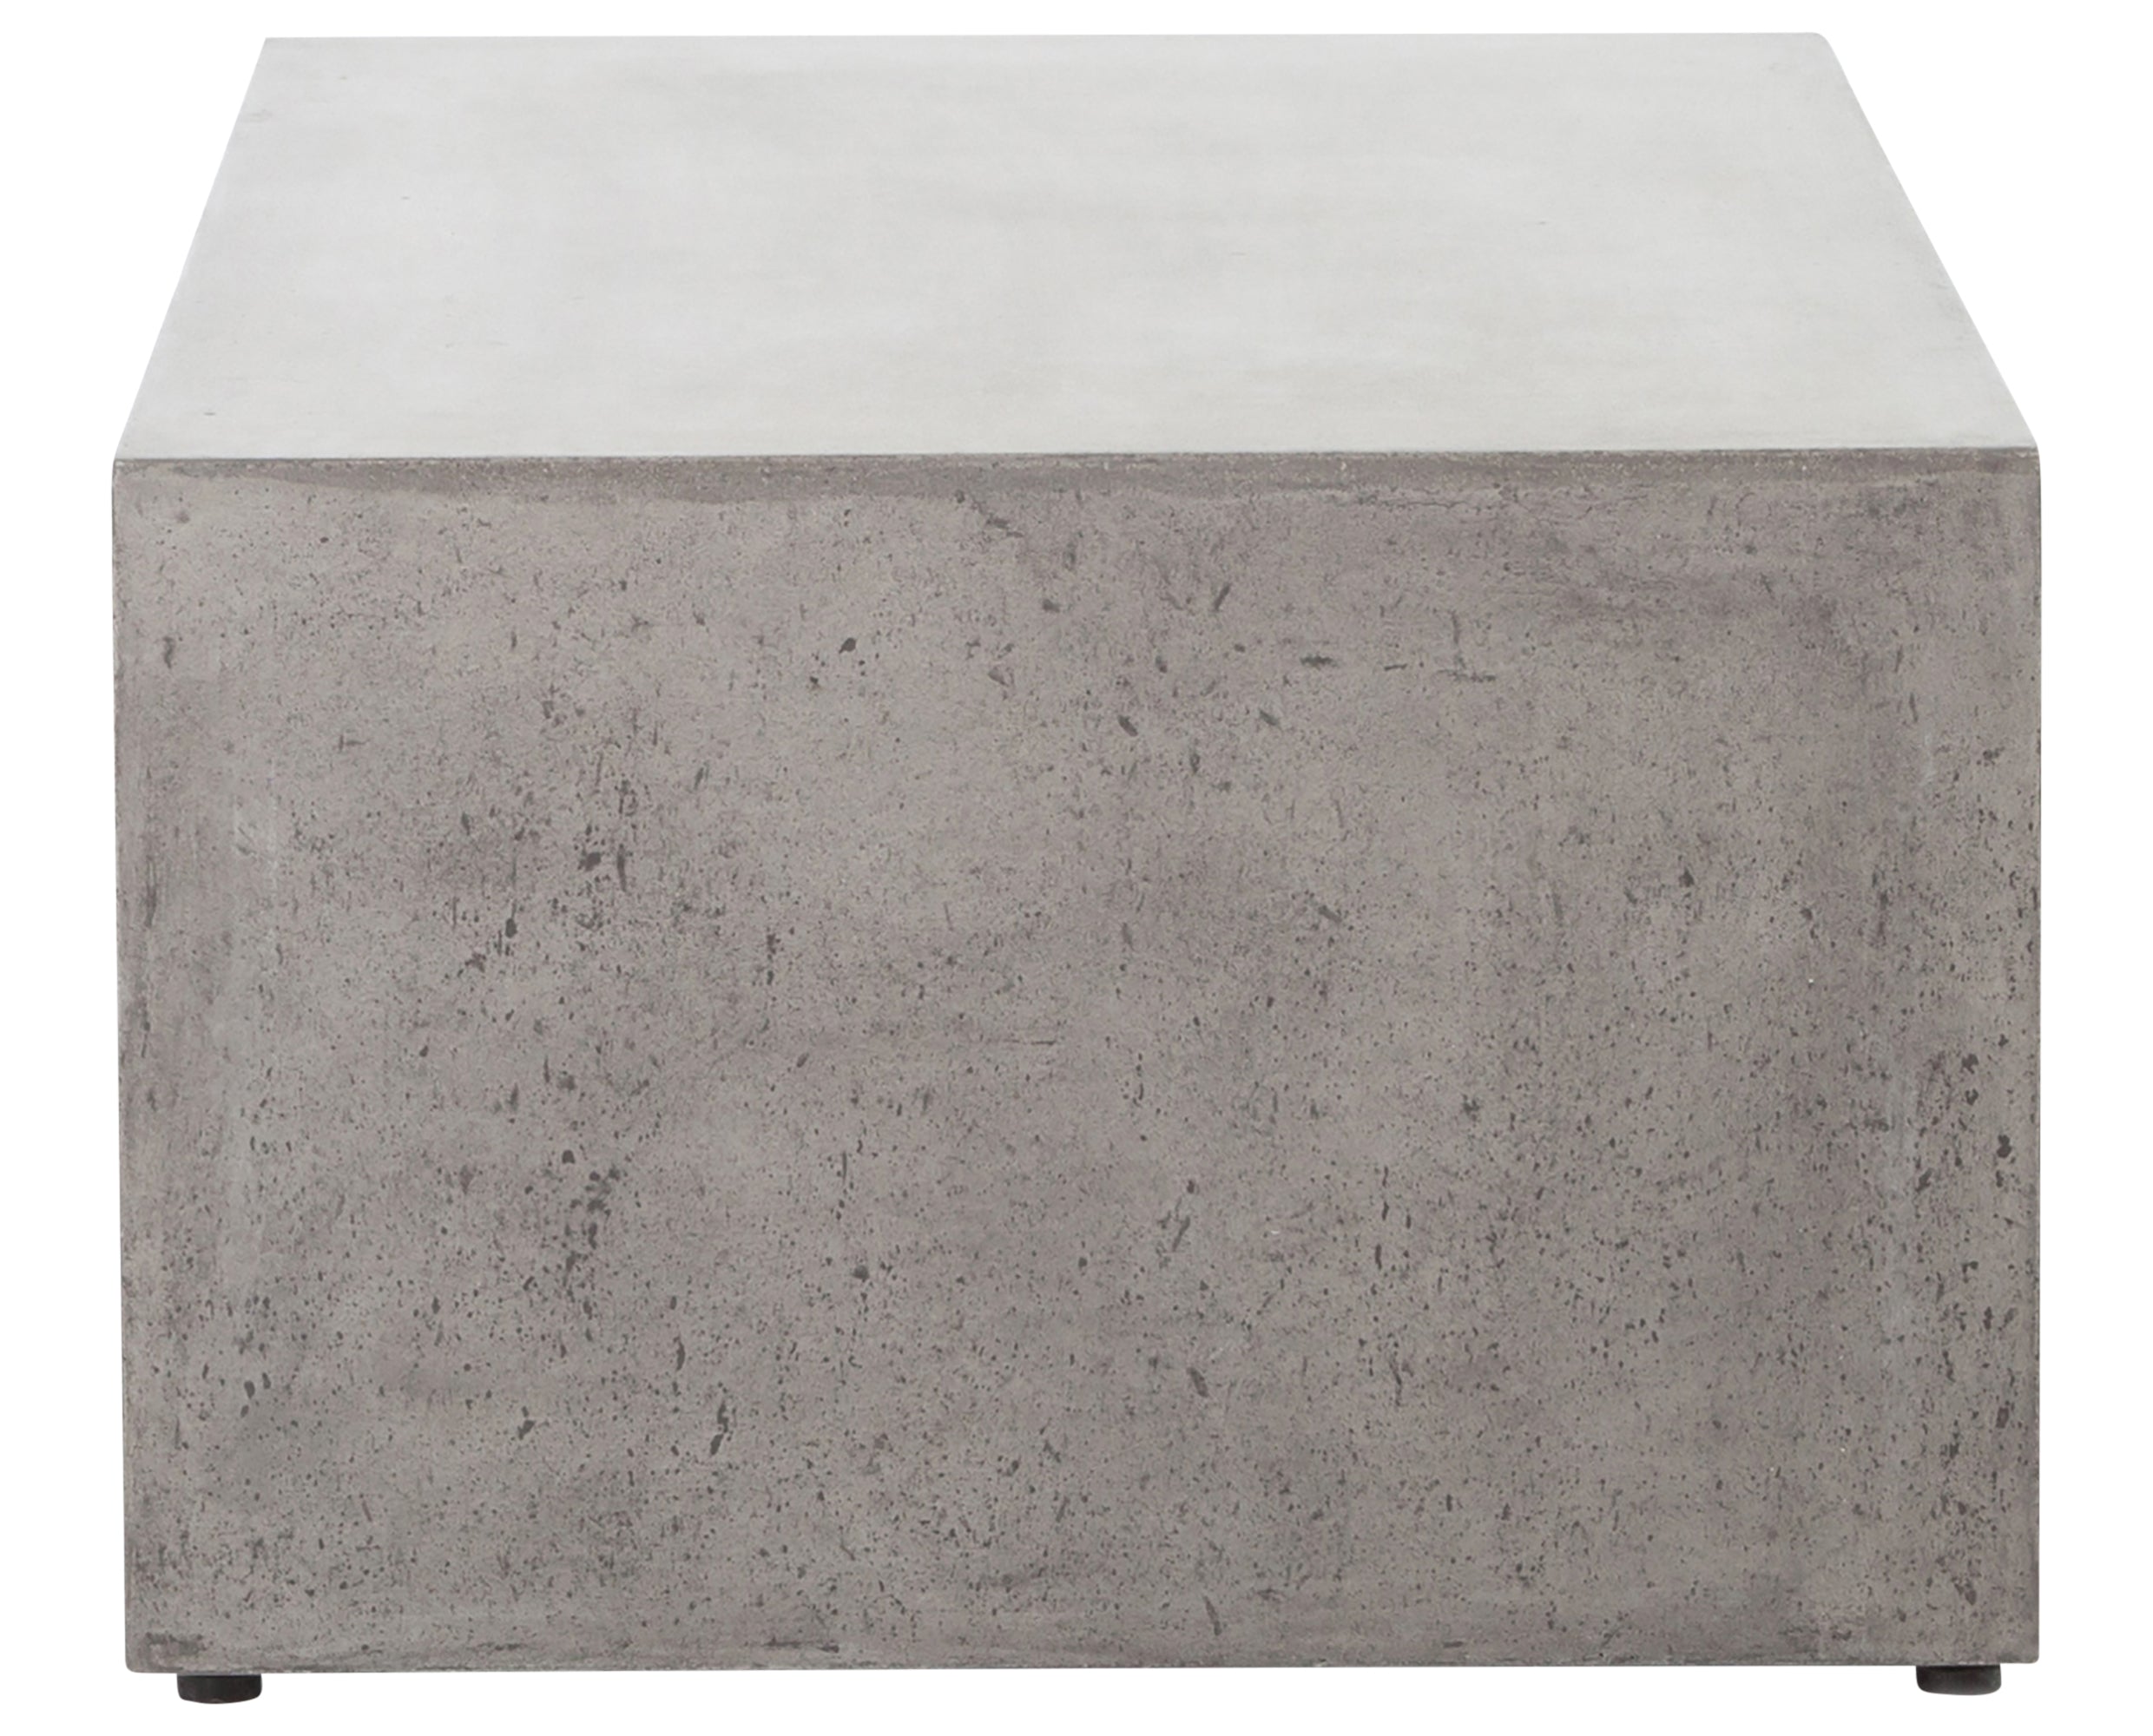 Dark Grey Concrete with Antique Black Metal | Hugo Coffee Table | Valley Ridge Furniture